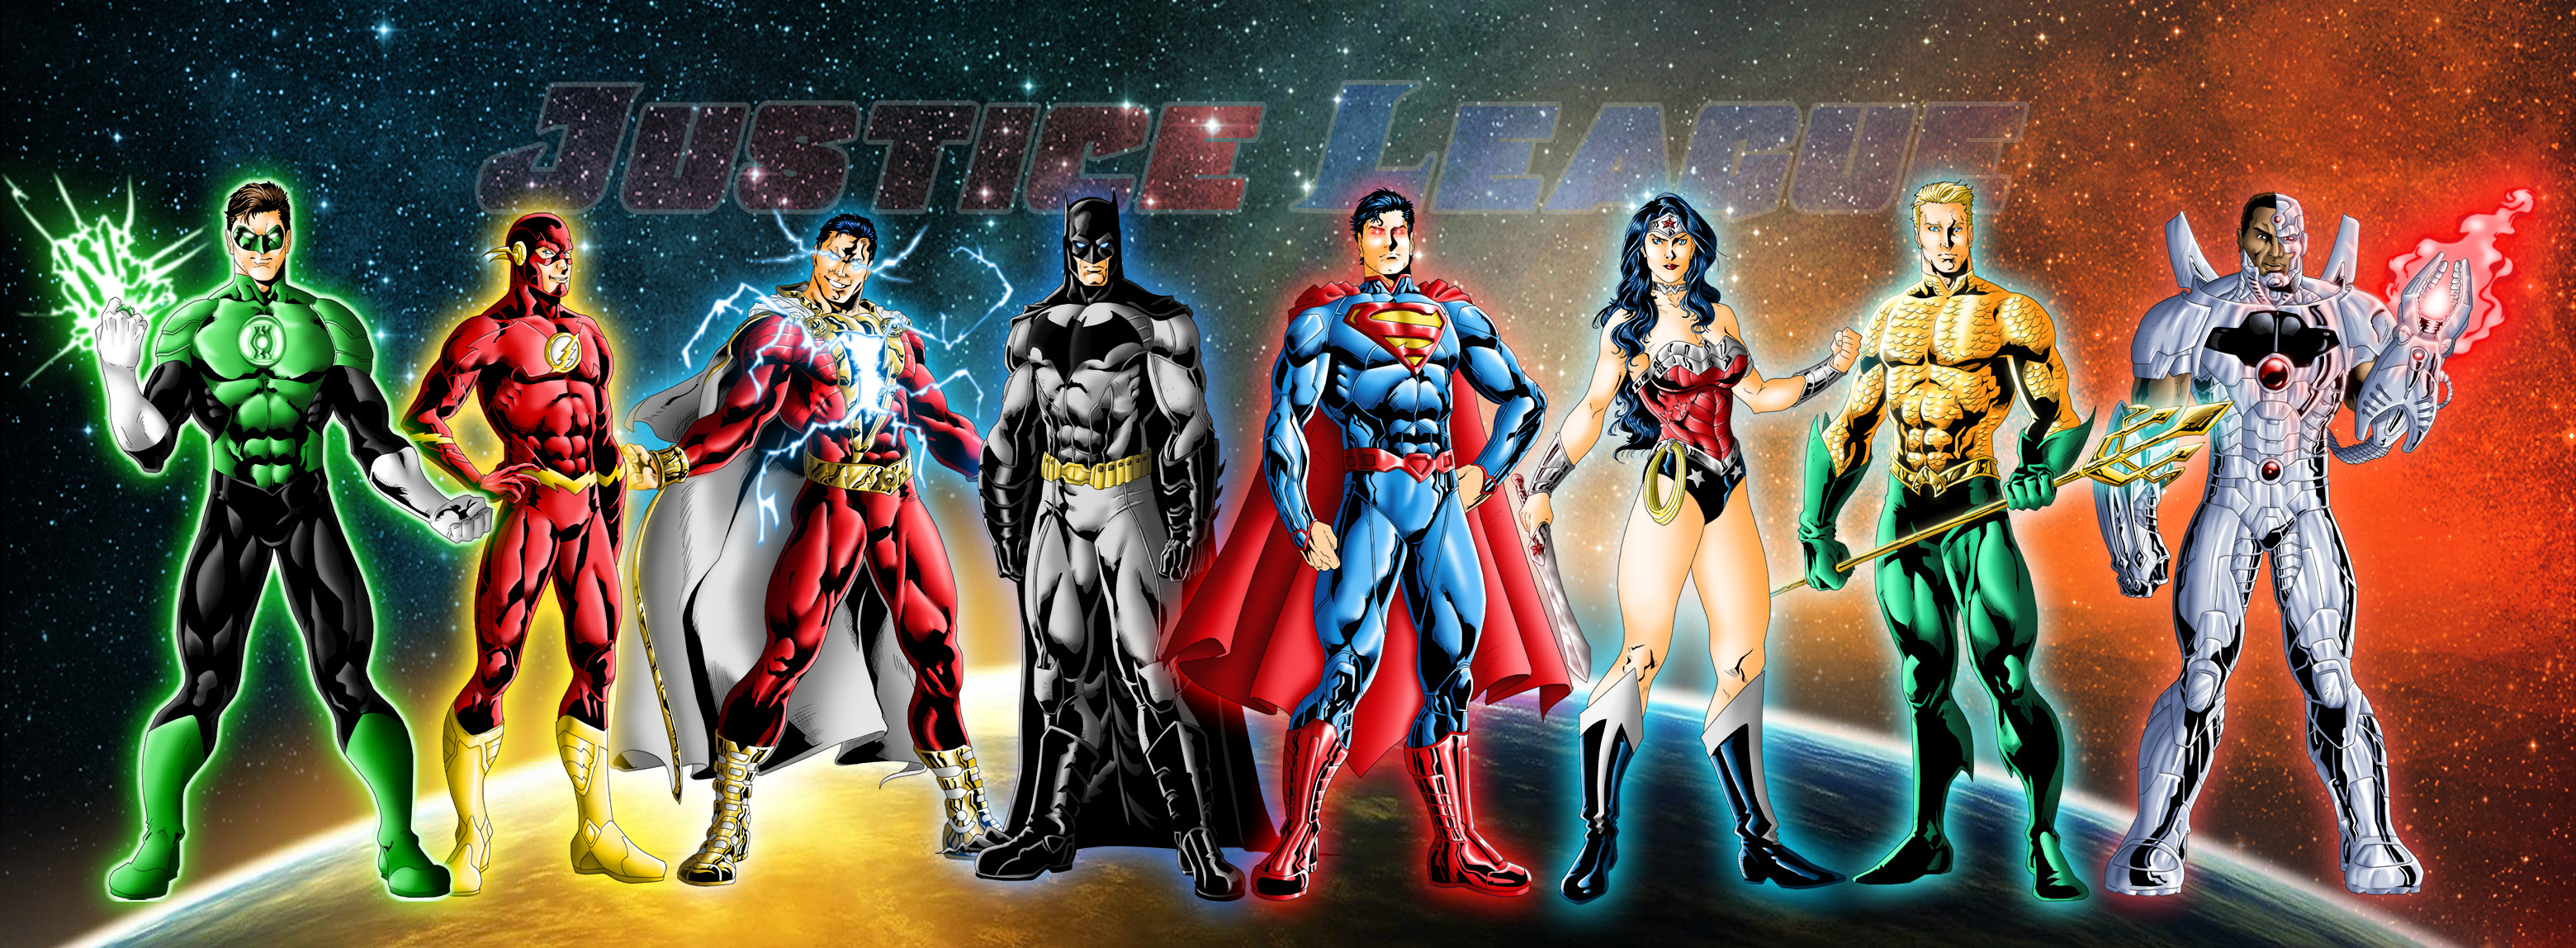 3120x1148 Justice League New 52 Wallpaper Justice league 